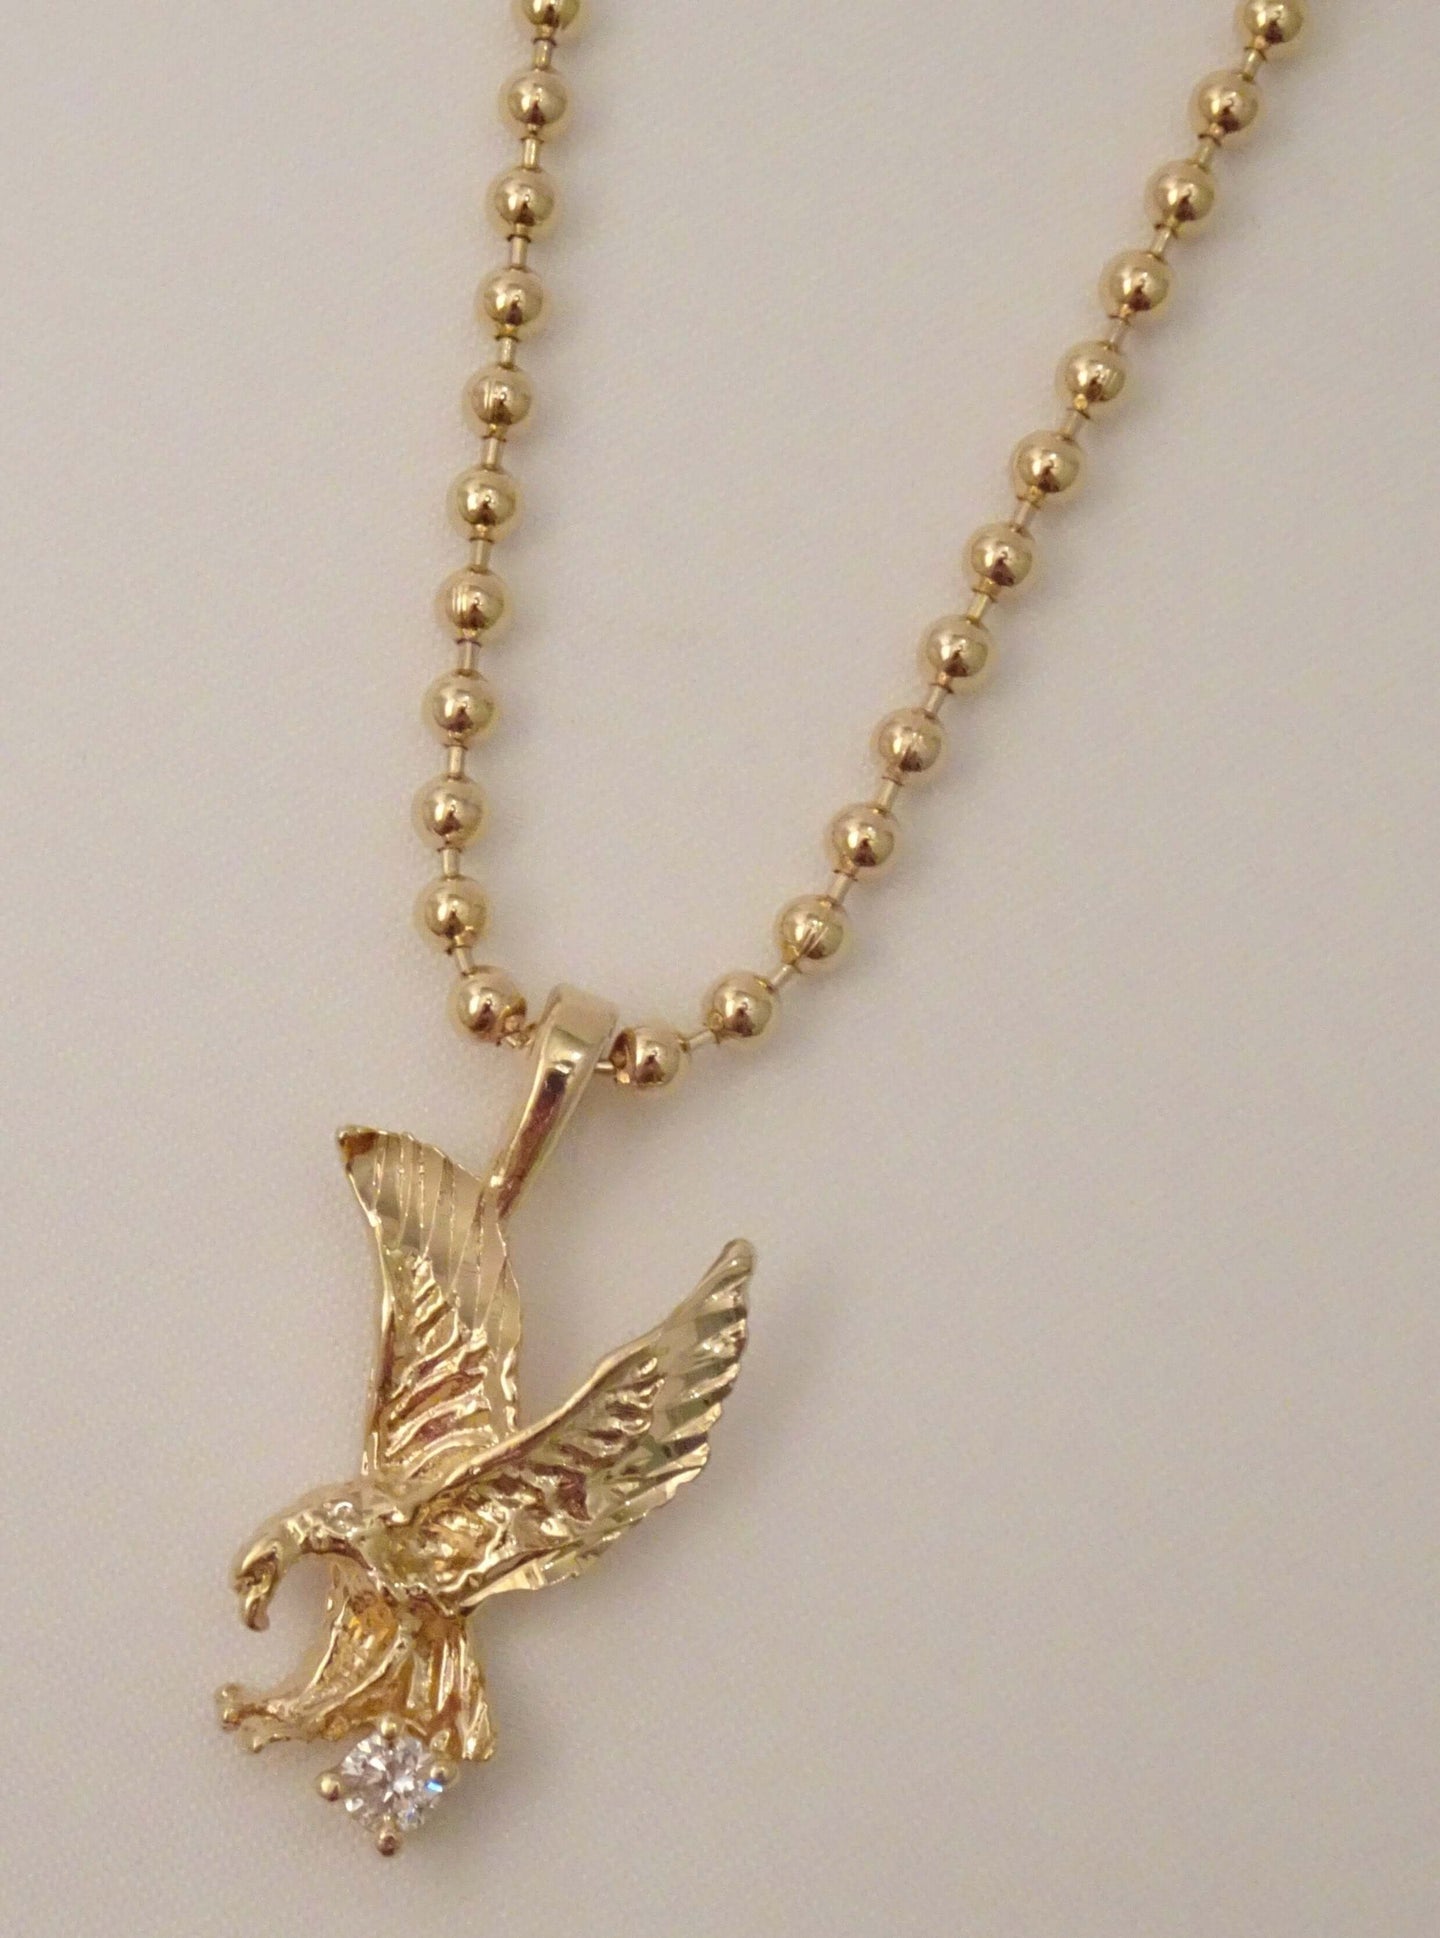 eagle necklace, gold eagle necklace, gold eagle pendant, eagle jewelry, american jewelry, biker jewelry